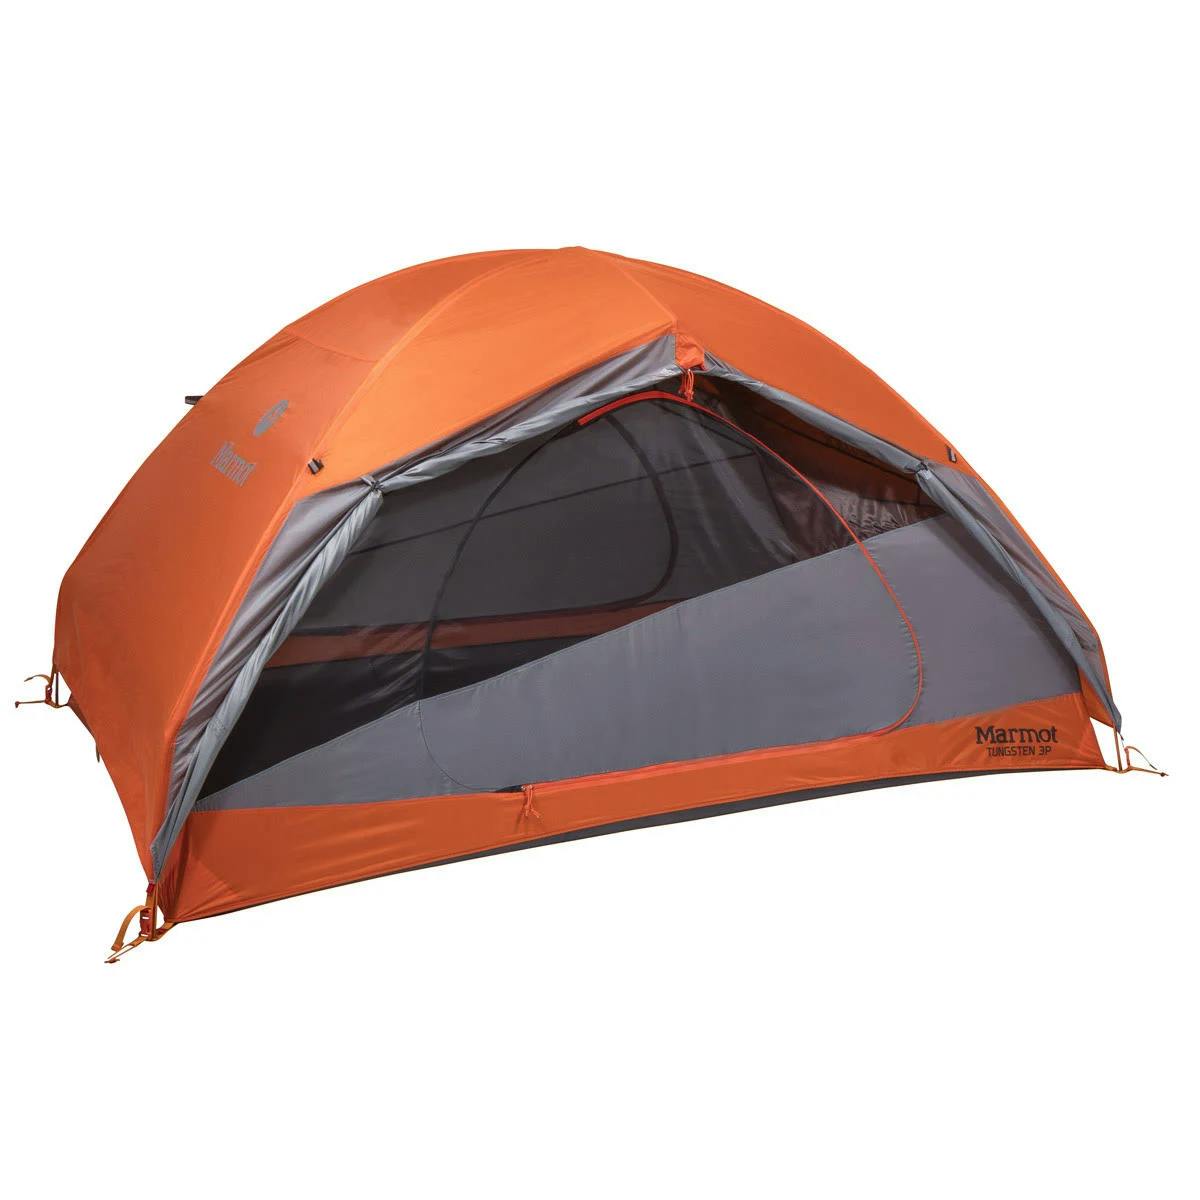 Marmot - Tungsten 3P Tent - Blaze Steel